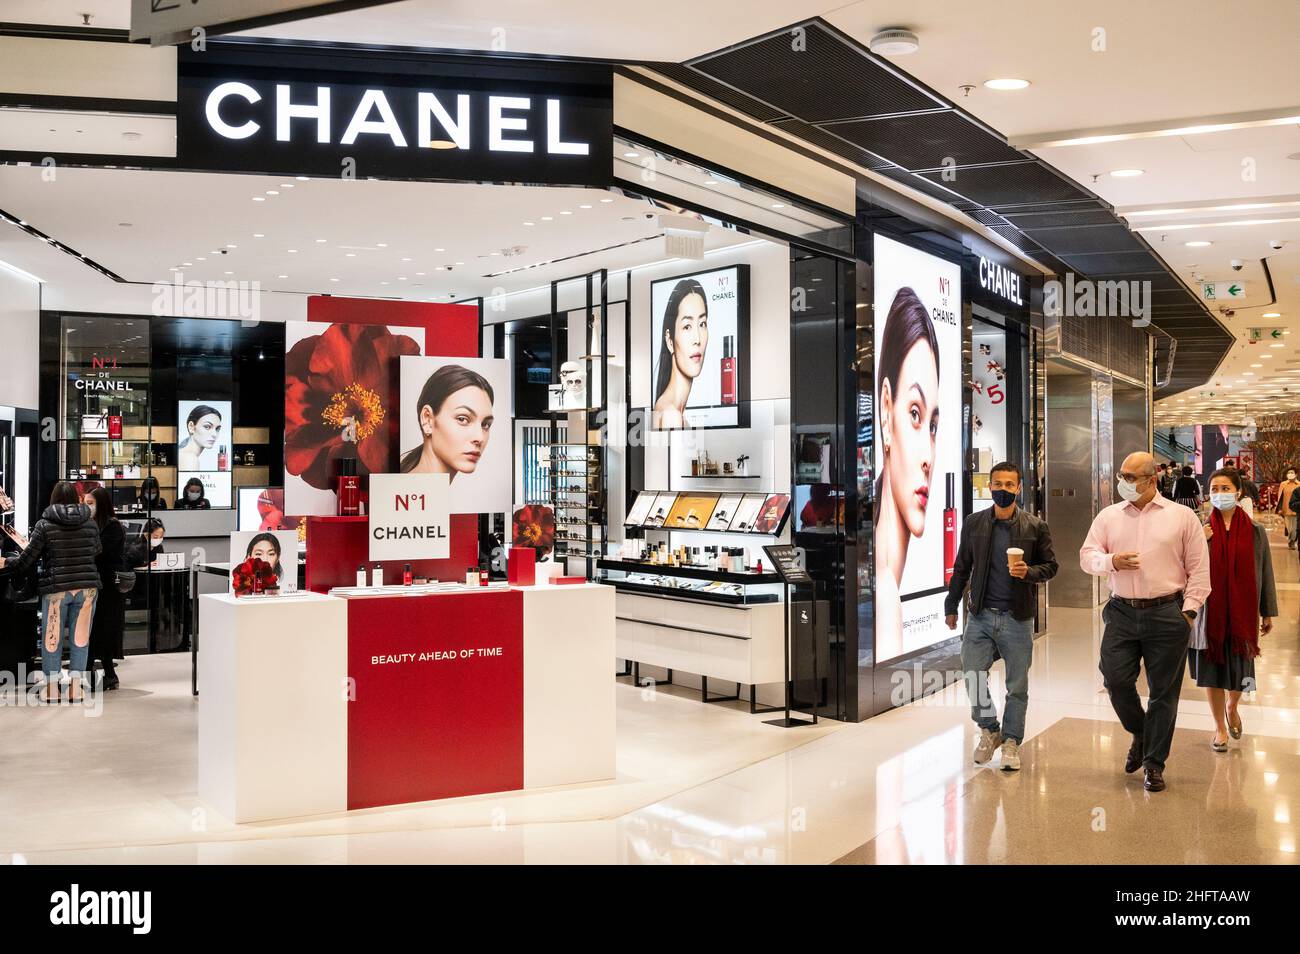 Chanel Beauté Boutique in Vienna - Retail-Imaging